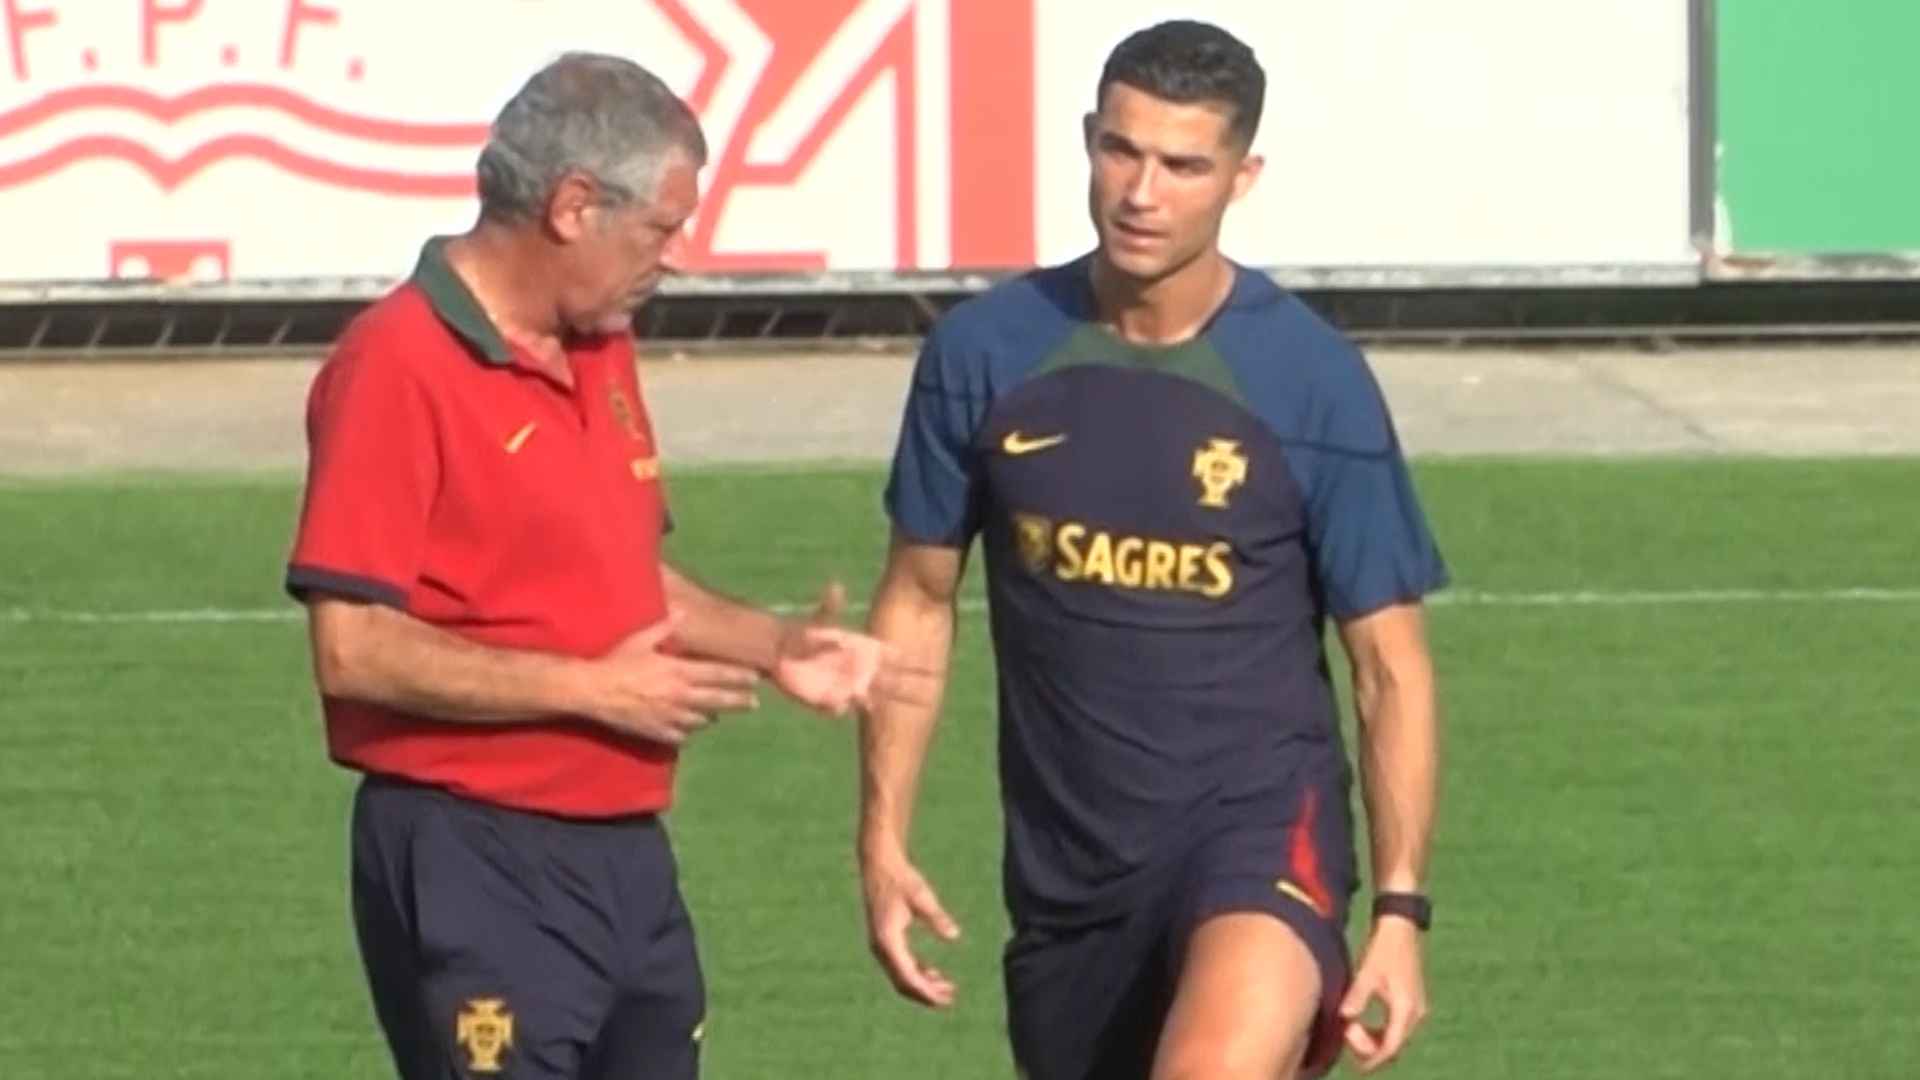 Cristiano Ronaldo joins Portugal training ahead of Nations League match